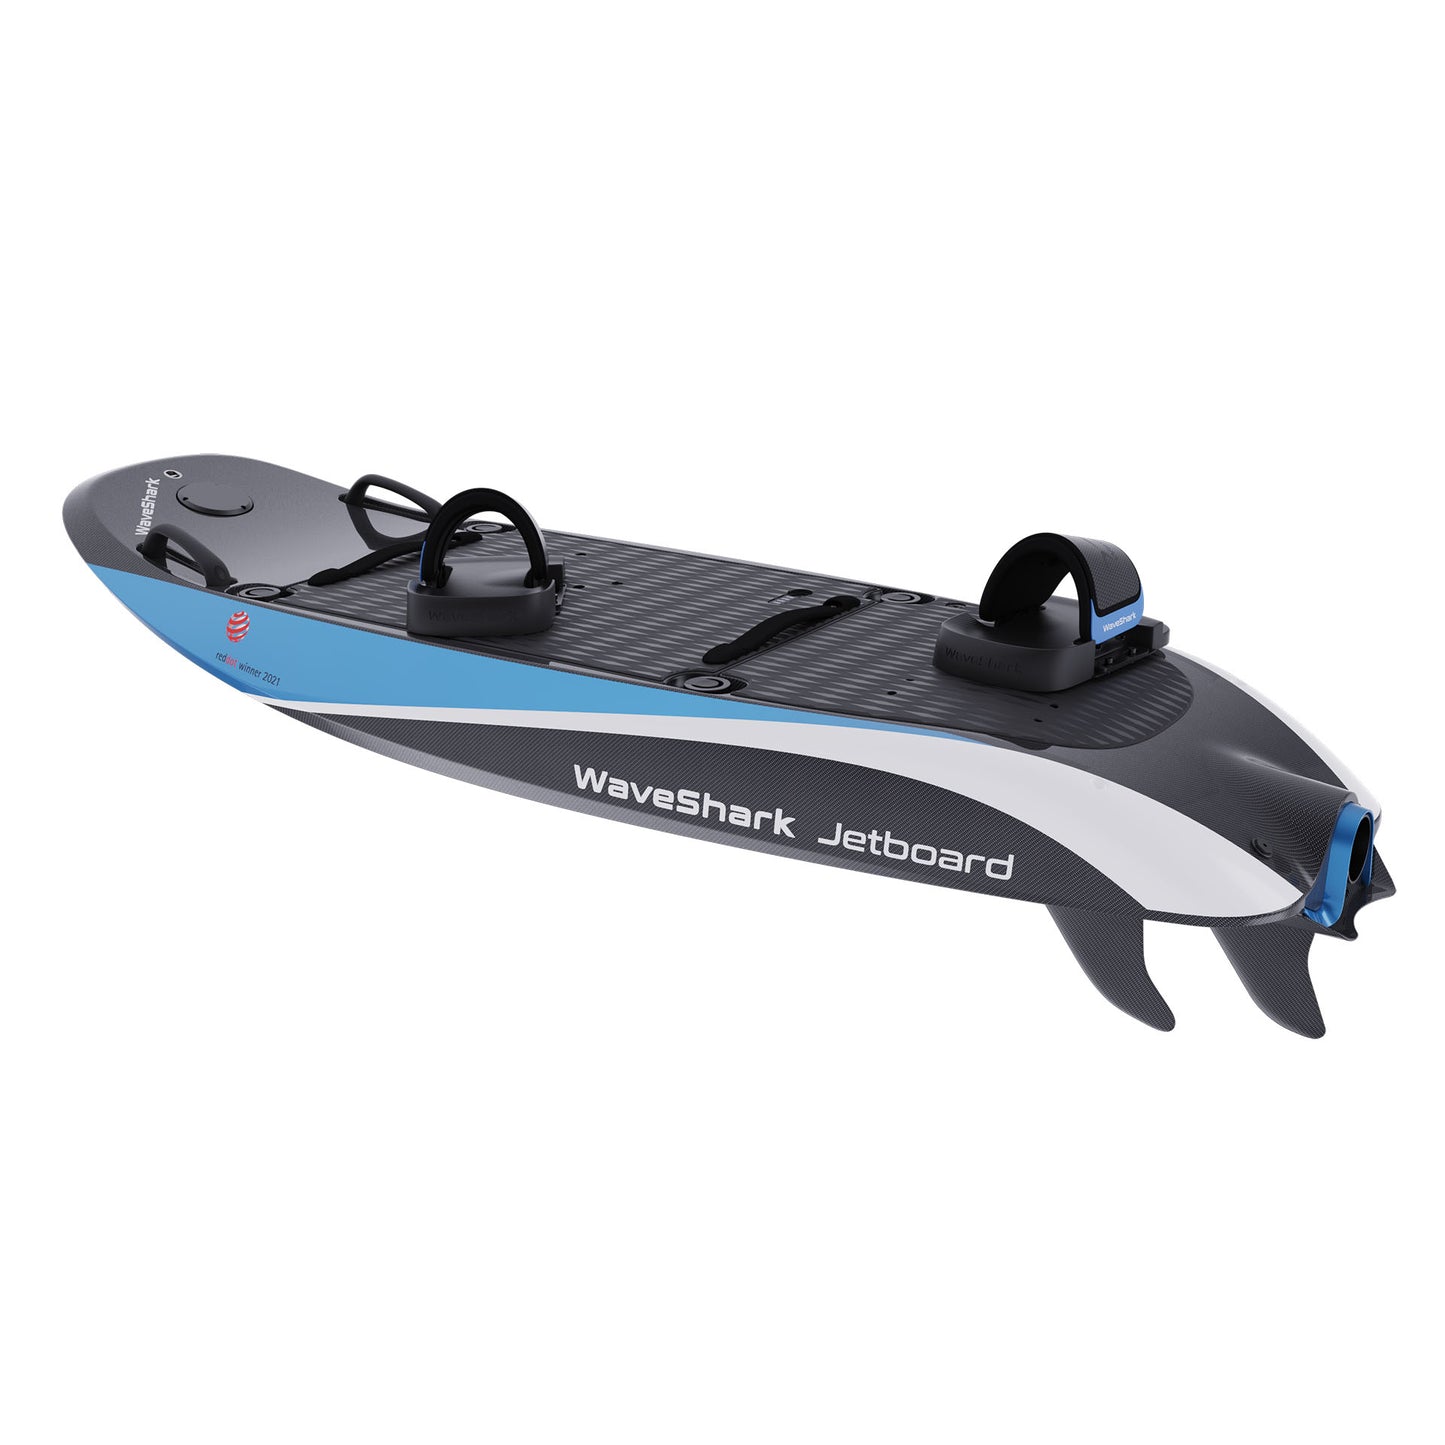 3. Waveshark Jetboard 2 sport